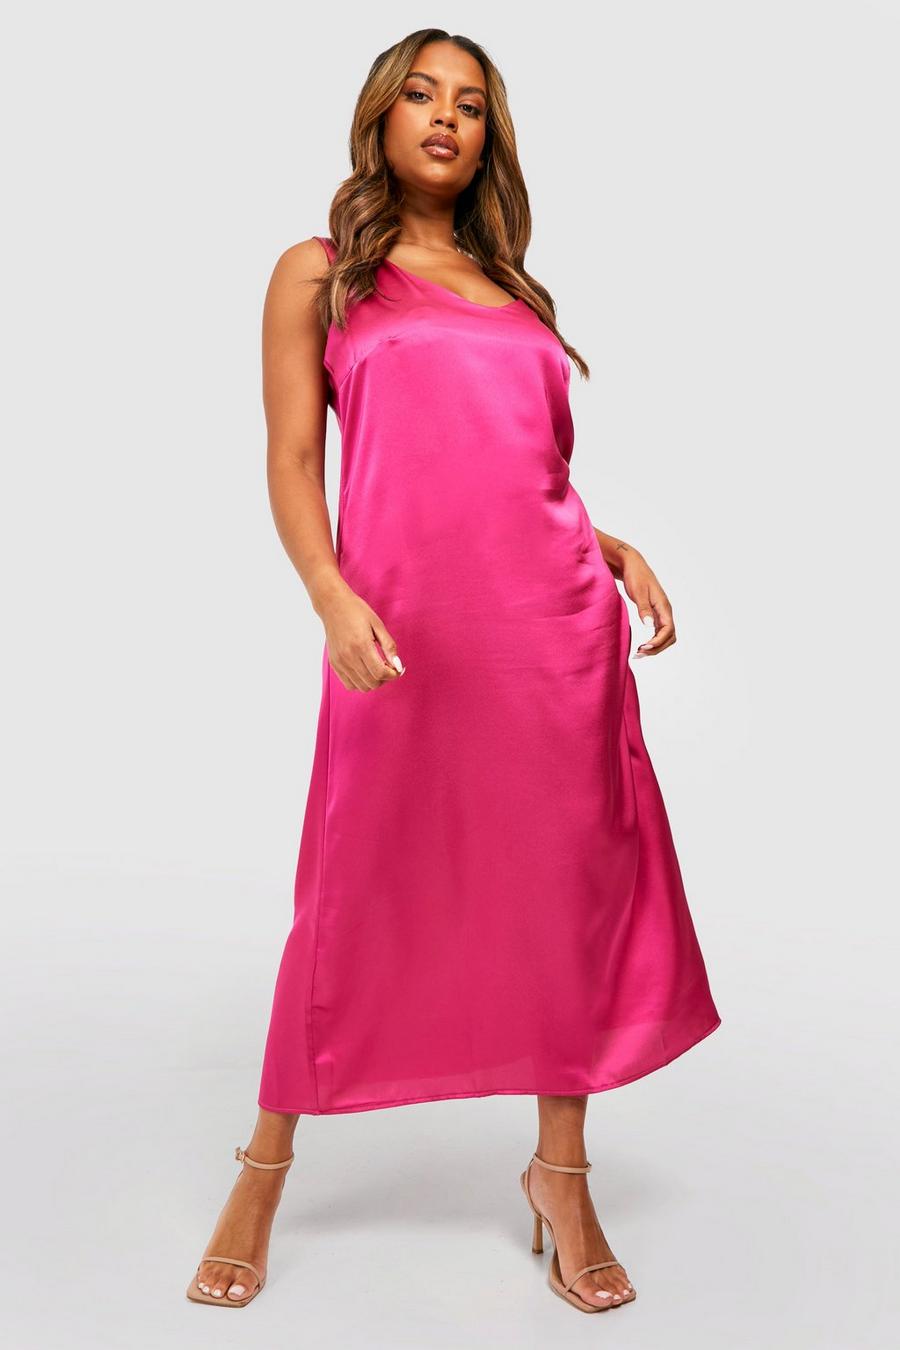 Vestido lencero Plus de raso con tirantes anchos, Hot pink rosa